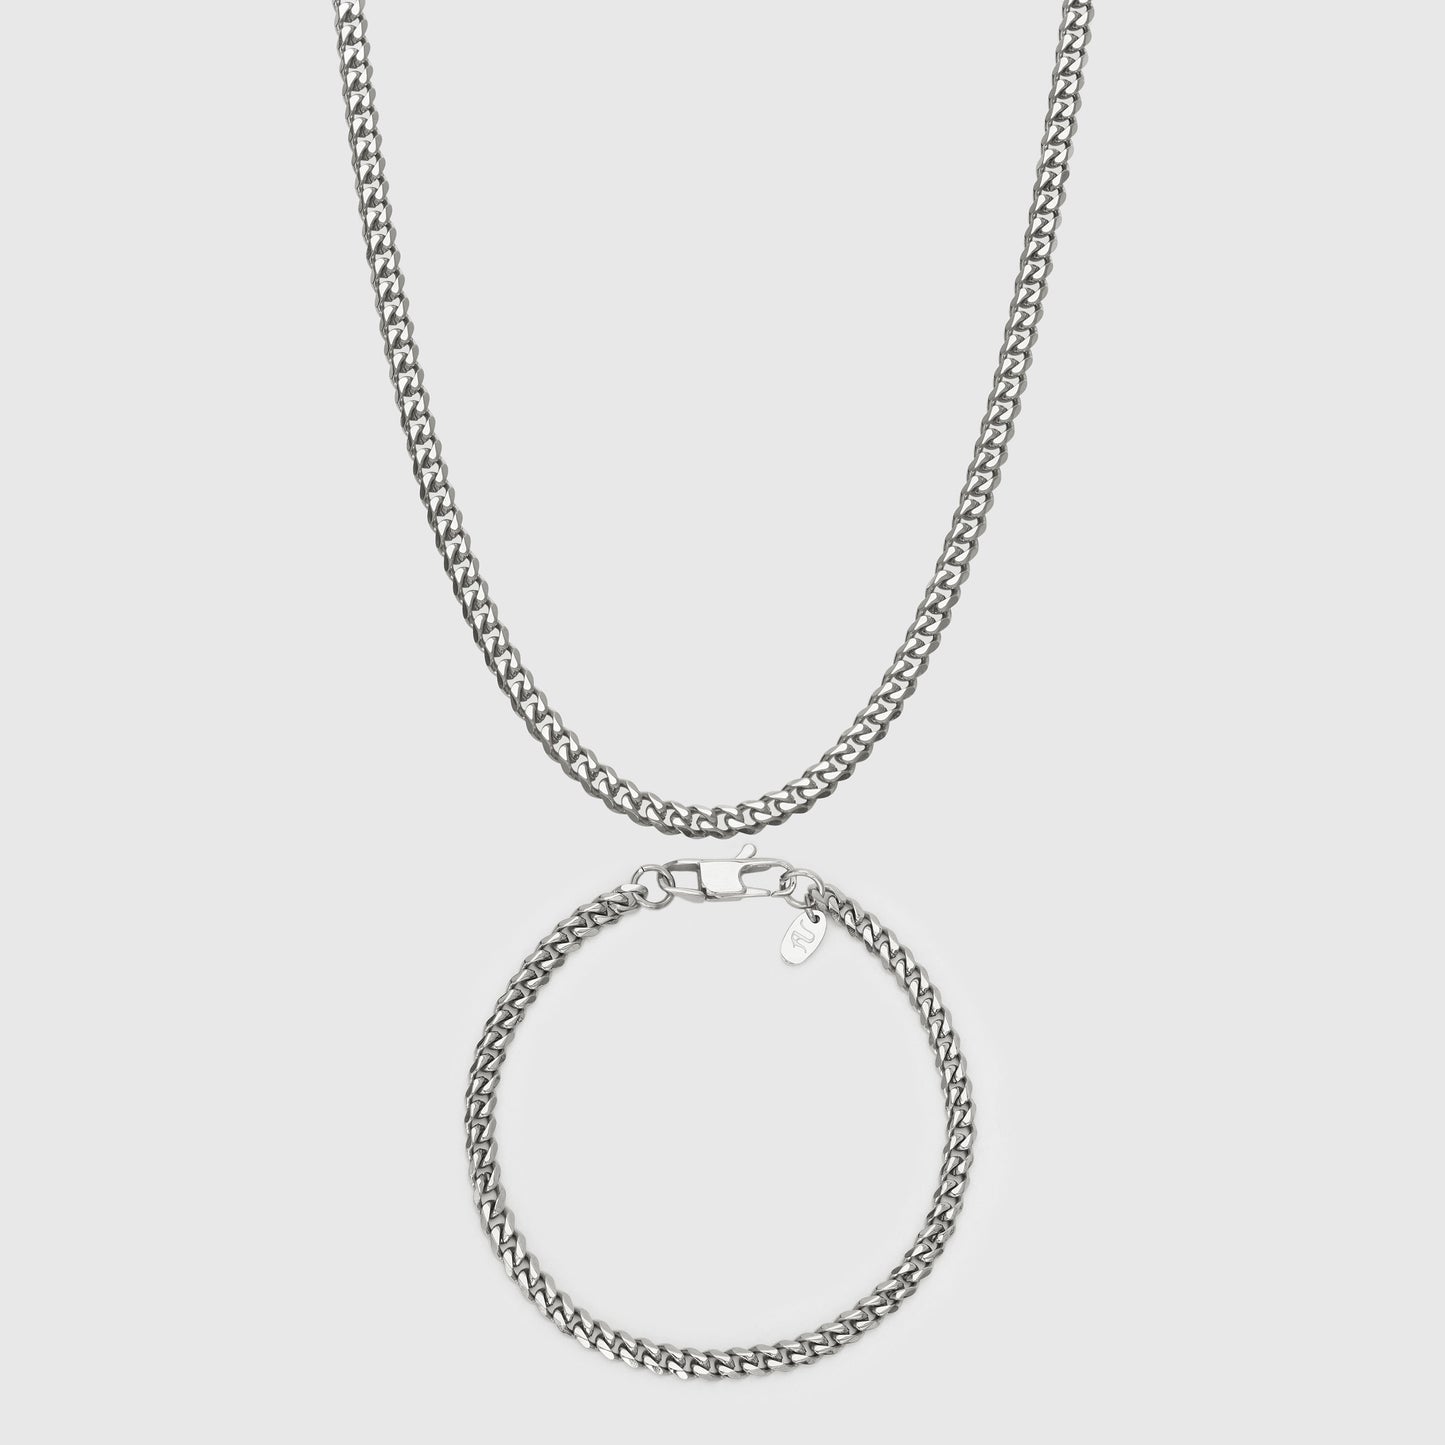 Silver Cuban Link Chain and Bracelet Set